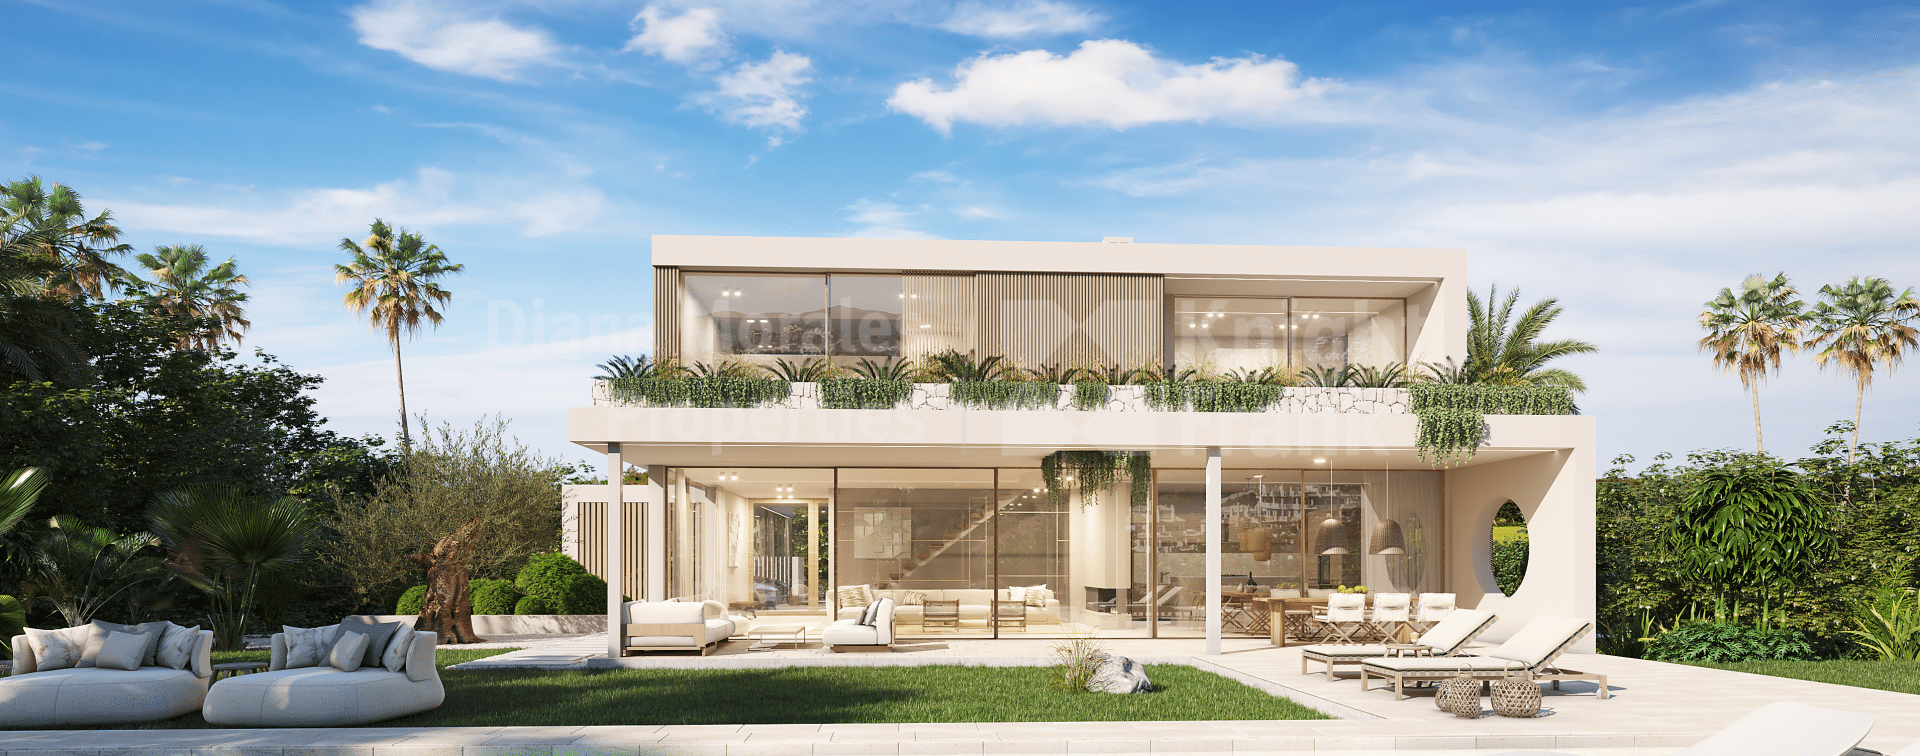 La Alqueria, New villa close to golf courses in residential urbanisation